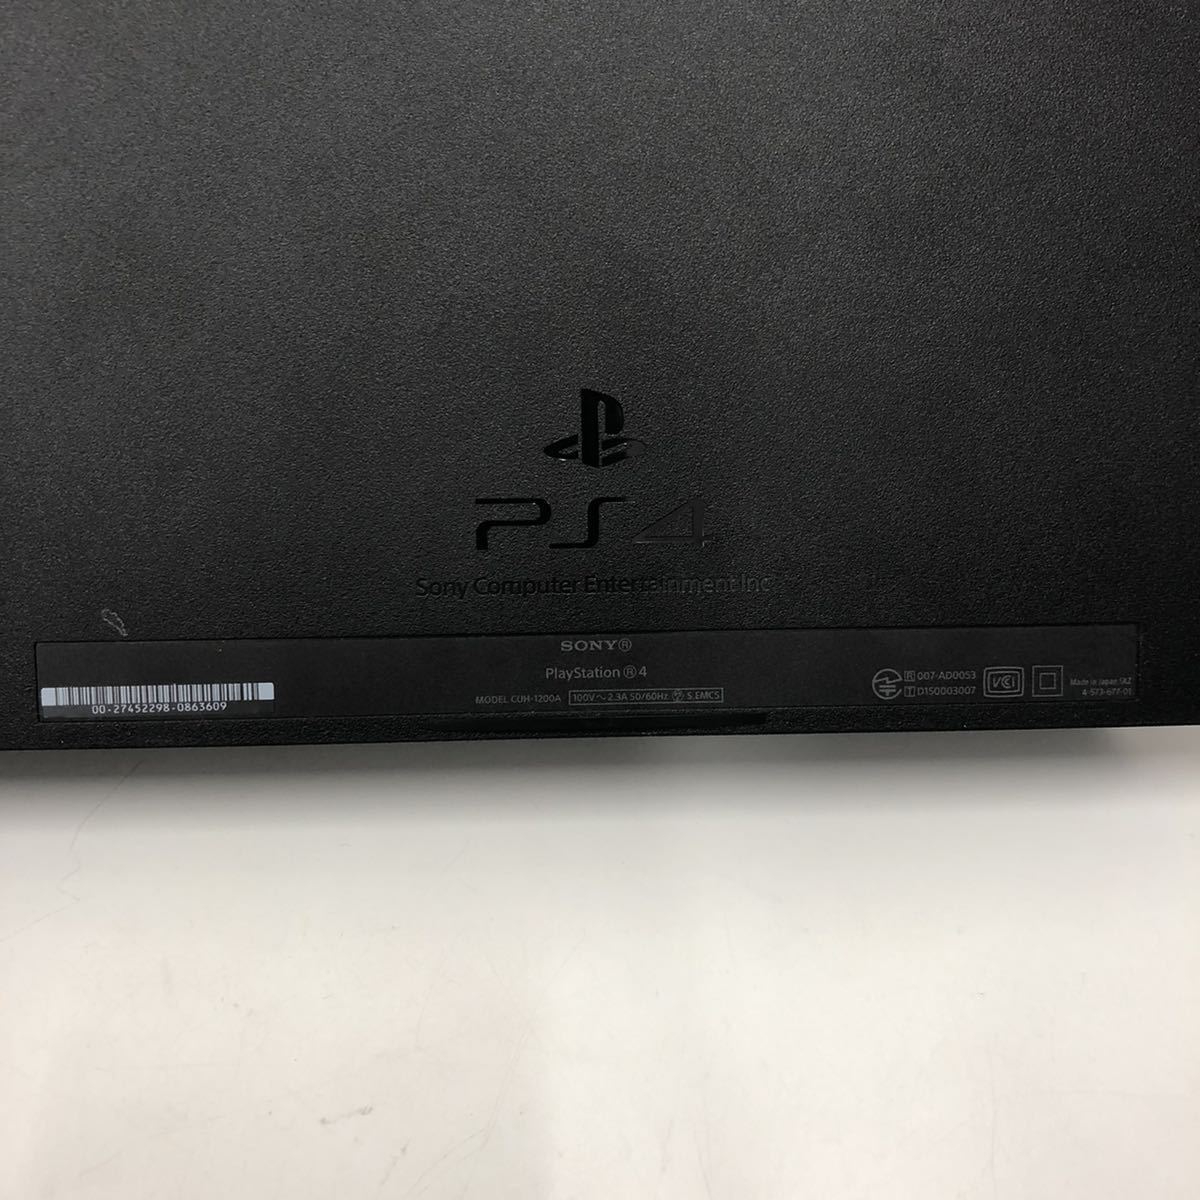 KR22111 ソニー ゲームハード PlayStation 4 PS4 本体 500G ブラック CUH-1200A sony